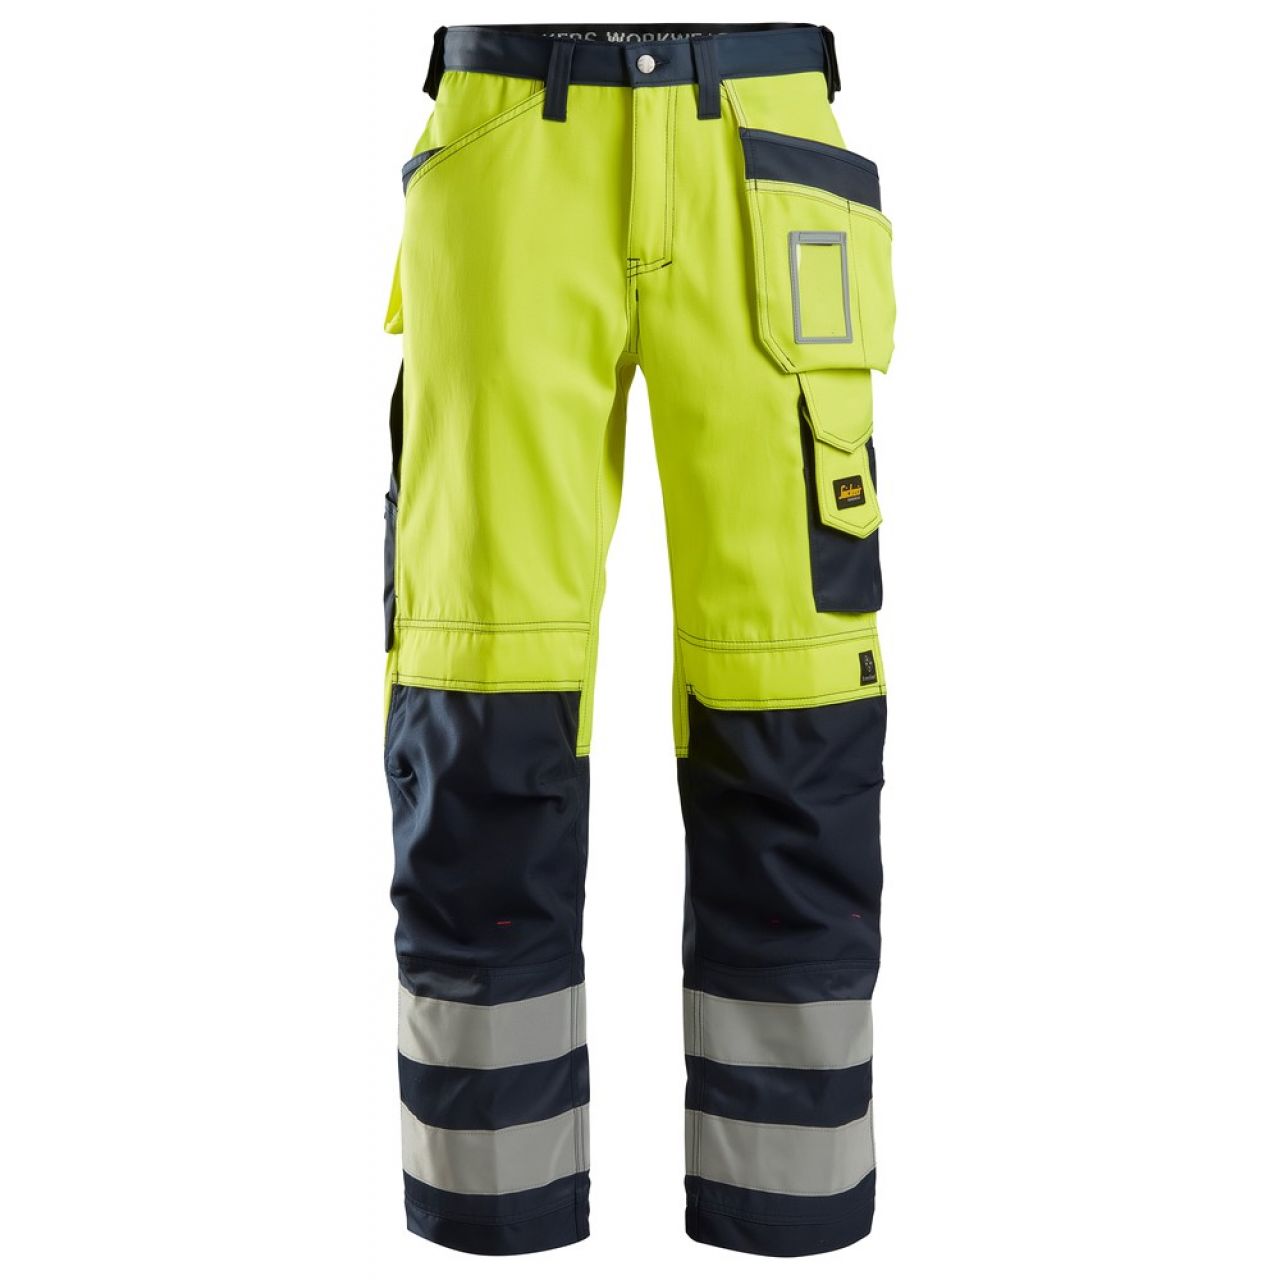 3233 Pantalones largos de trabajo de alta visibilidad clase 2 con bolsillos flotantes amarillo-azul marino talla 156